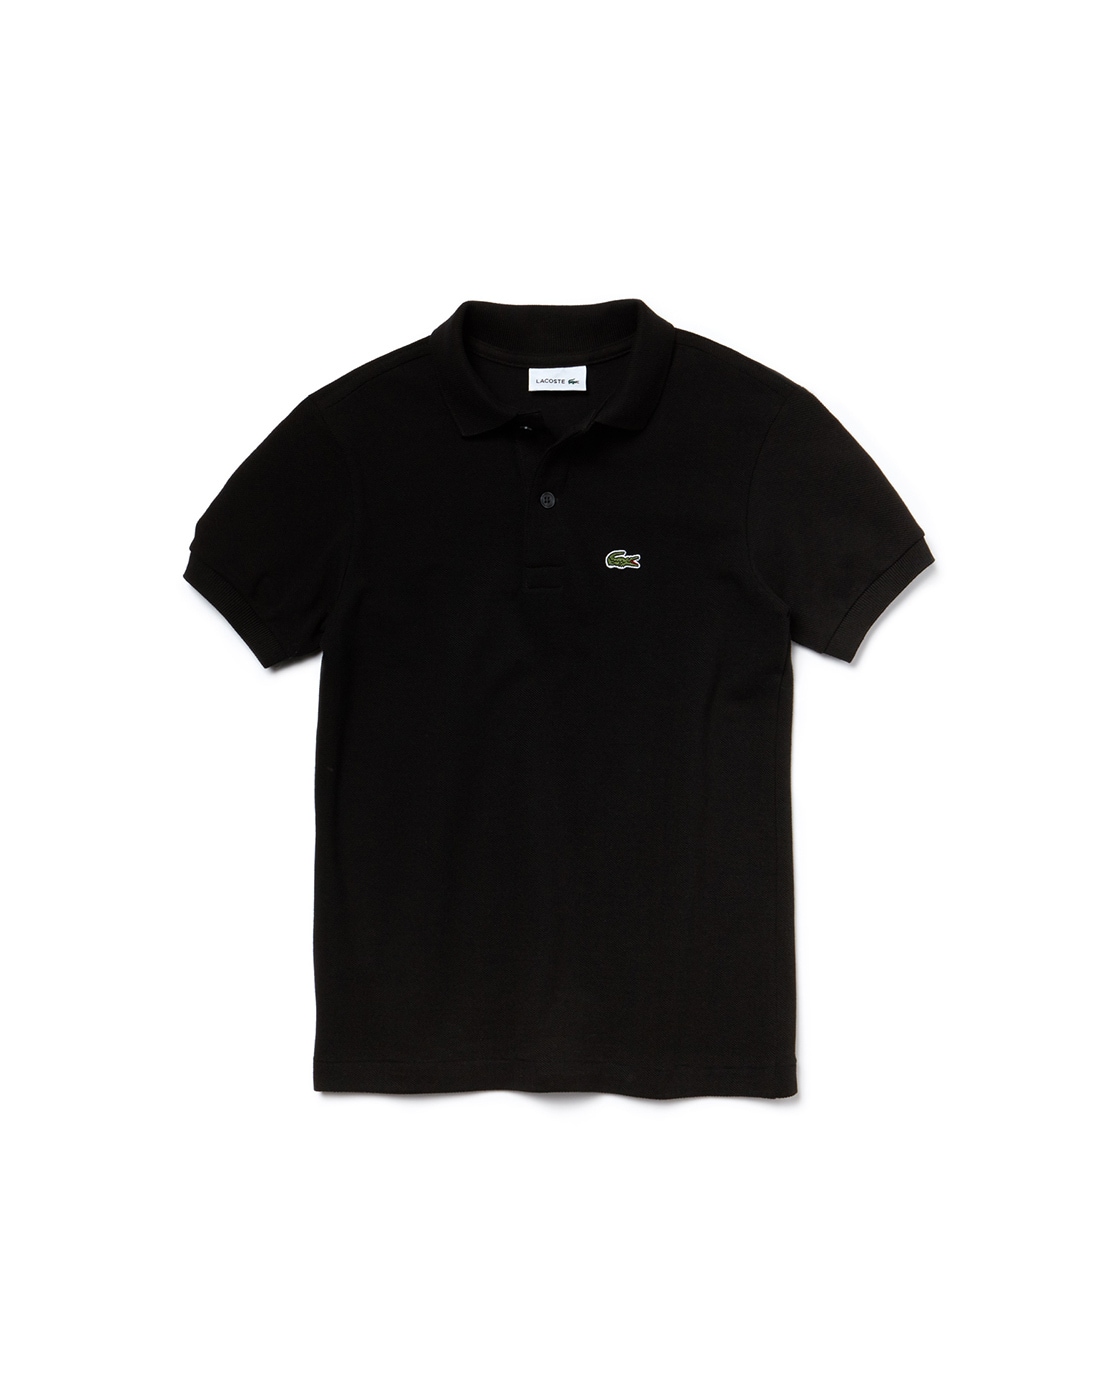 Black Tshirts for Boys Lacoste Online |